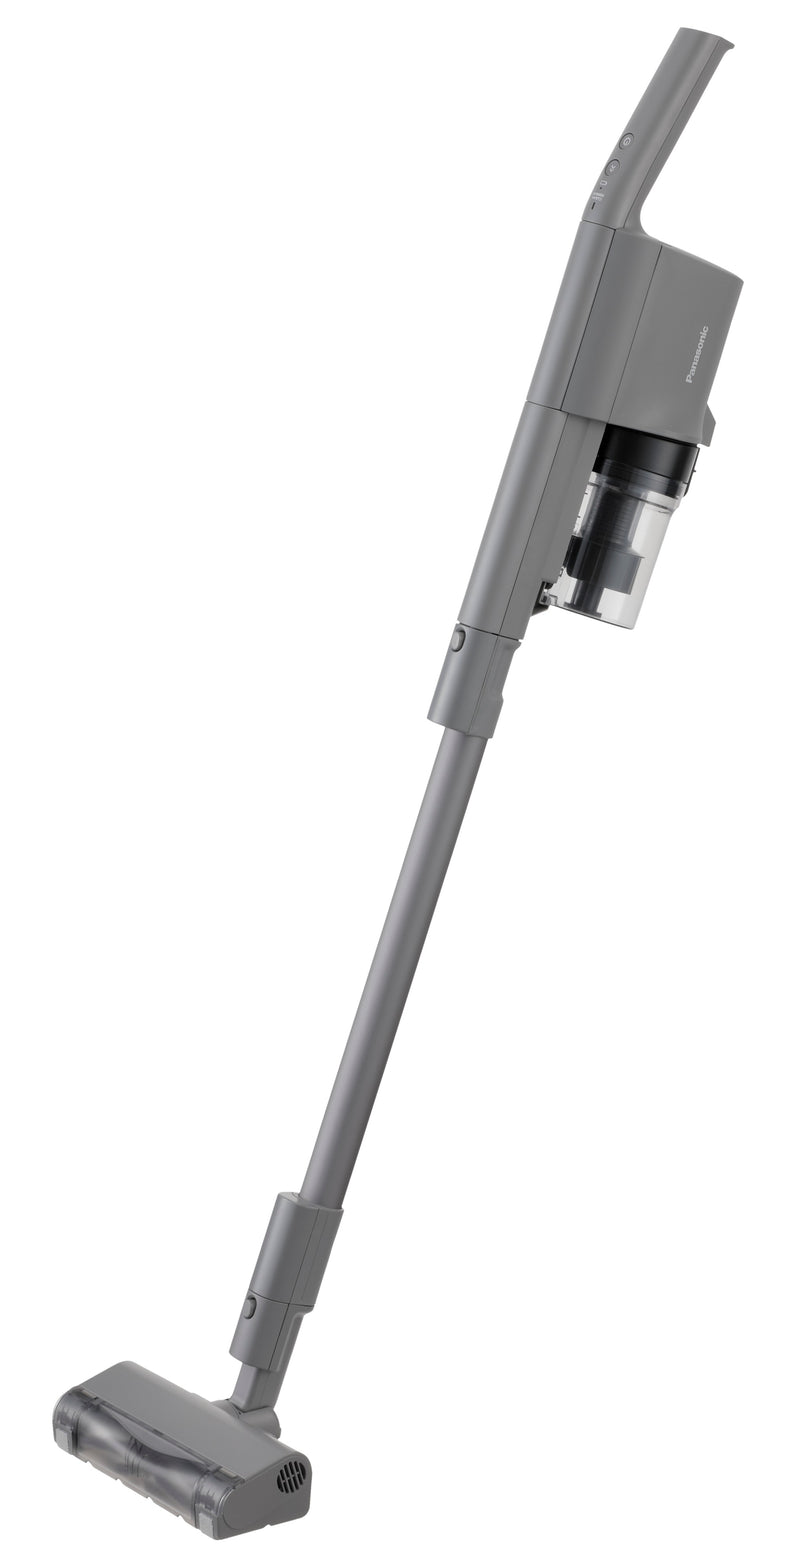 PANASONIC MC-SB53K Slim Tangle-Free Stick Type Vacuum Cleaner